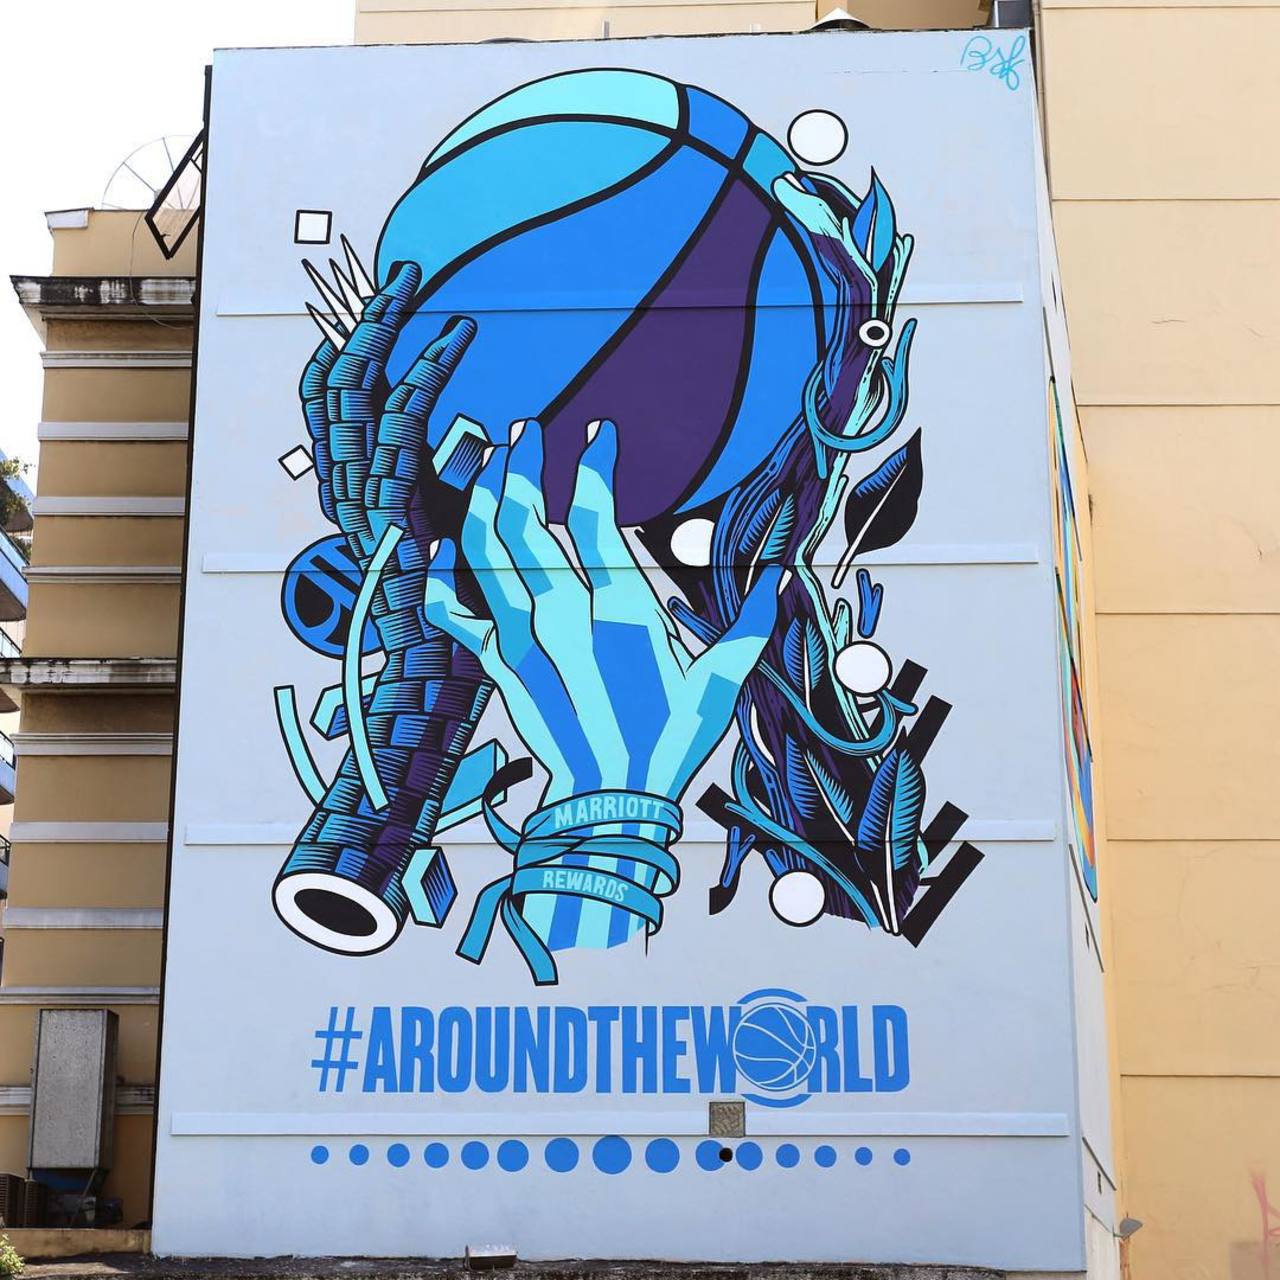 Around The World! Brand new mural by Bicicleta Sem Freio in Rio De Janeiro, Brazil. #StreetArt #Graffiti #Mural https://t.co/2z03jduUdU